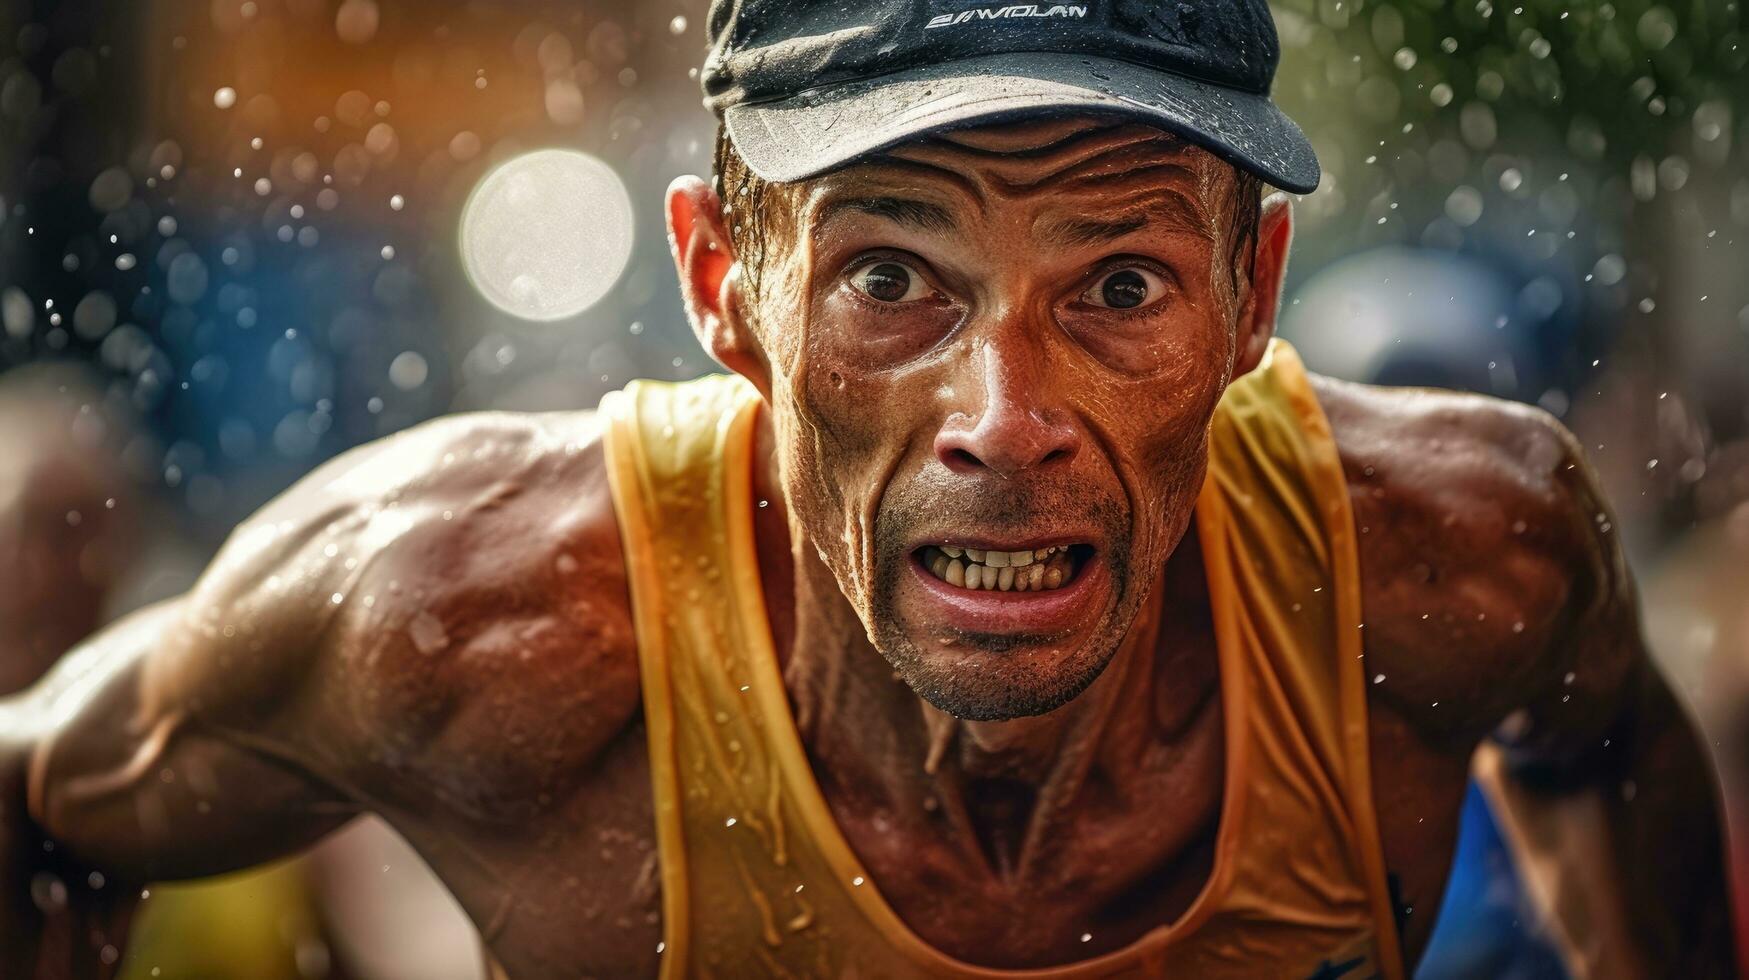 Marathon runner using last energy while approaching the finish line. Generative AI photo